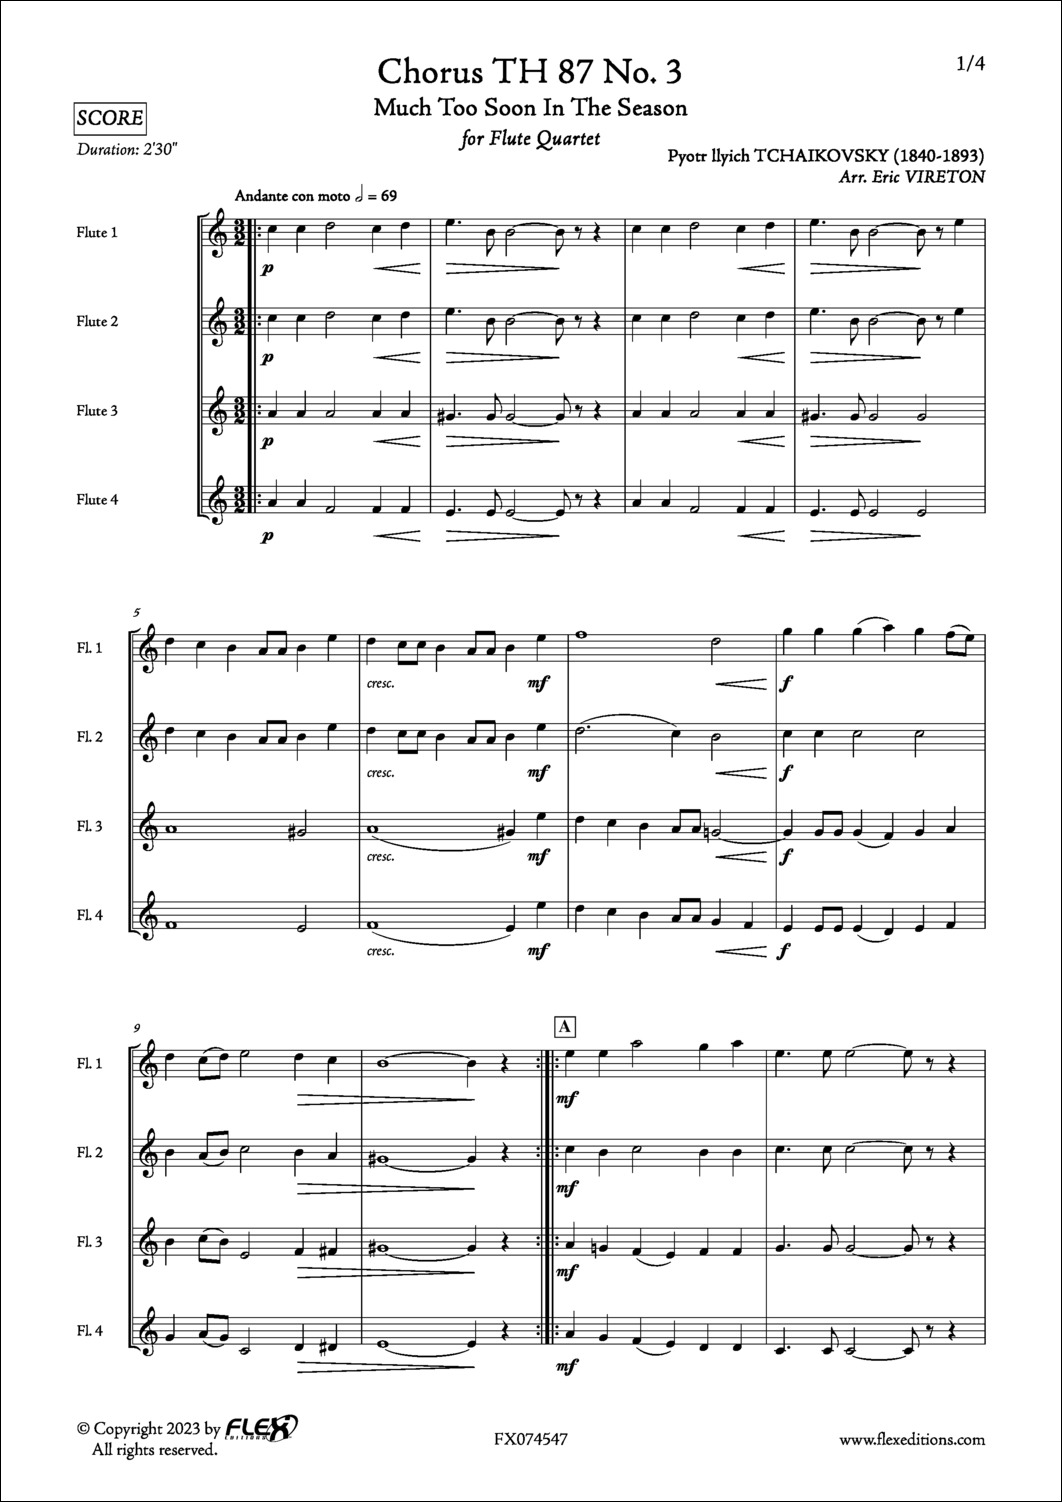 Chorus TH 87 No. 3 - P. I. TCHAIKOVSKY - <font color=#666666>Flute Quartet</font>